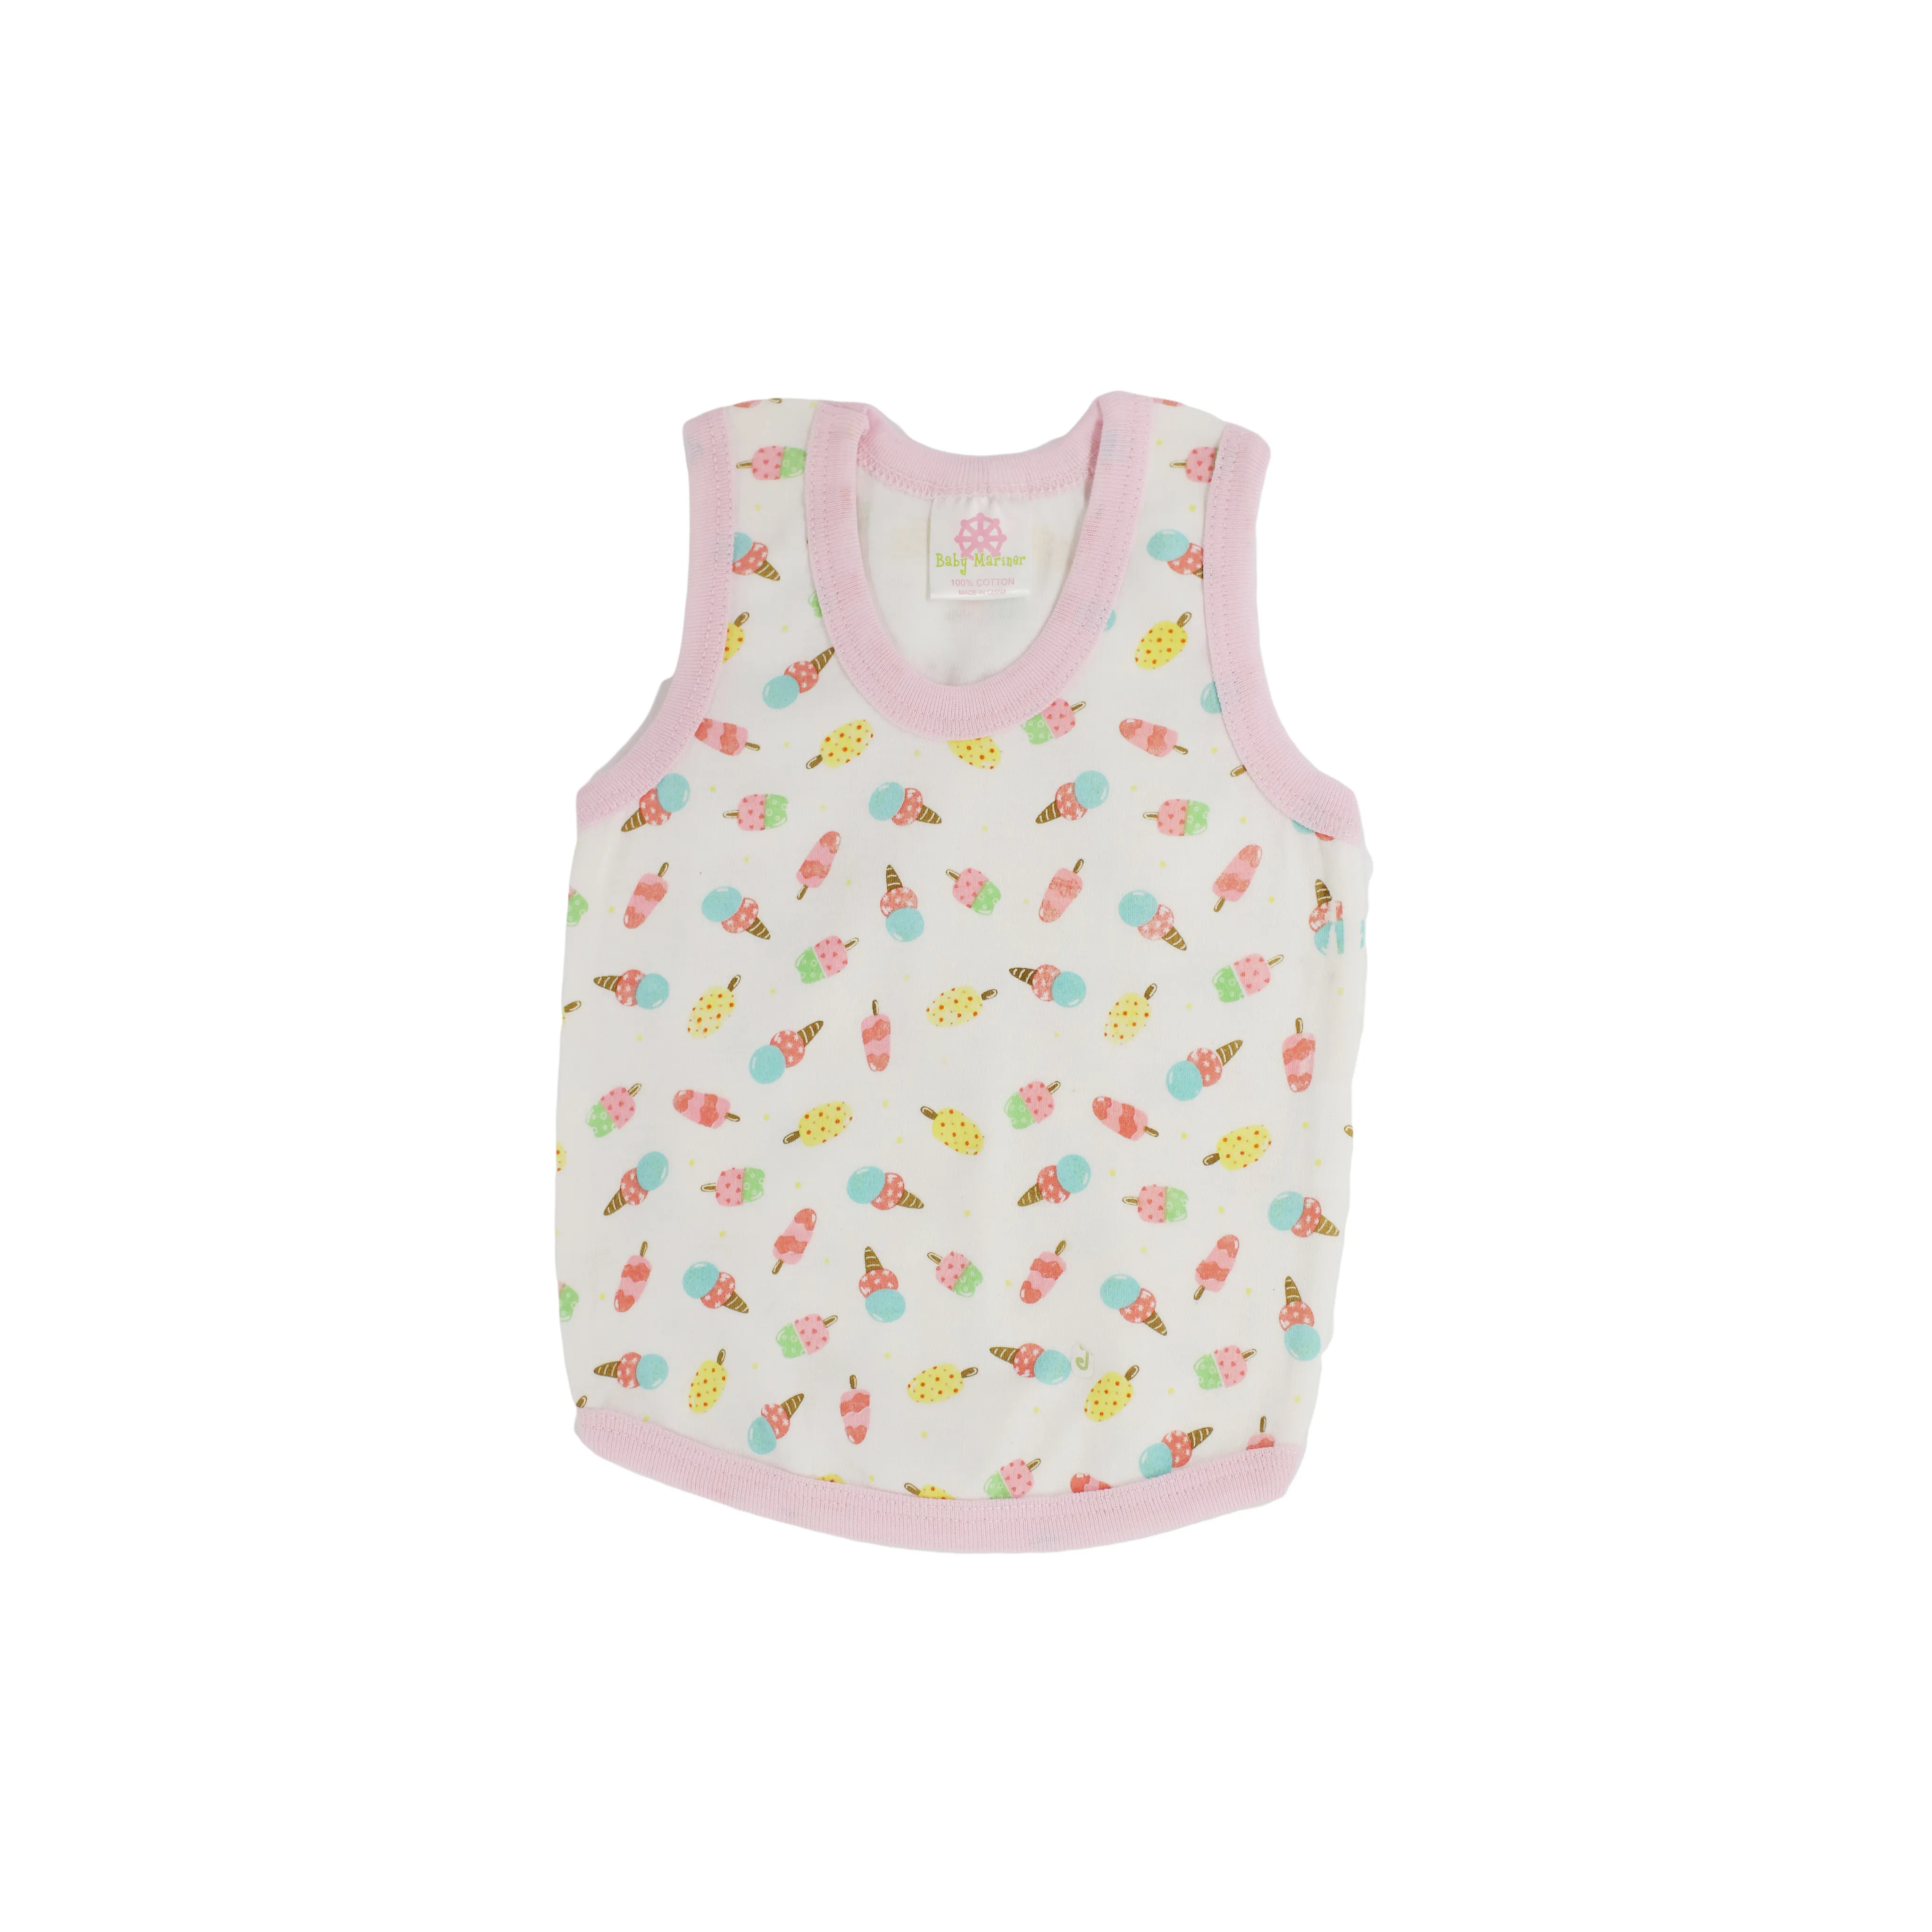 Printed ice cream pattern 100% cotton summer fashion baby vest